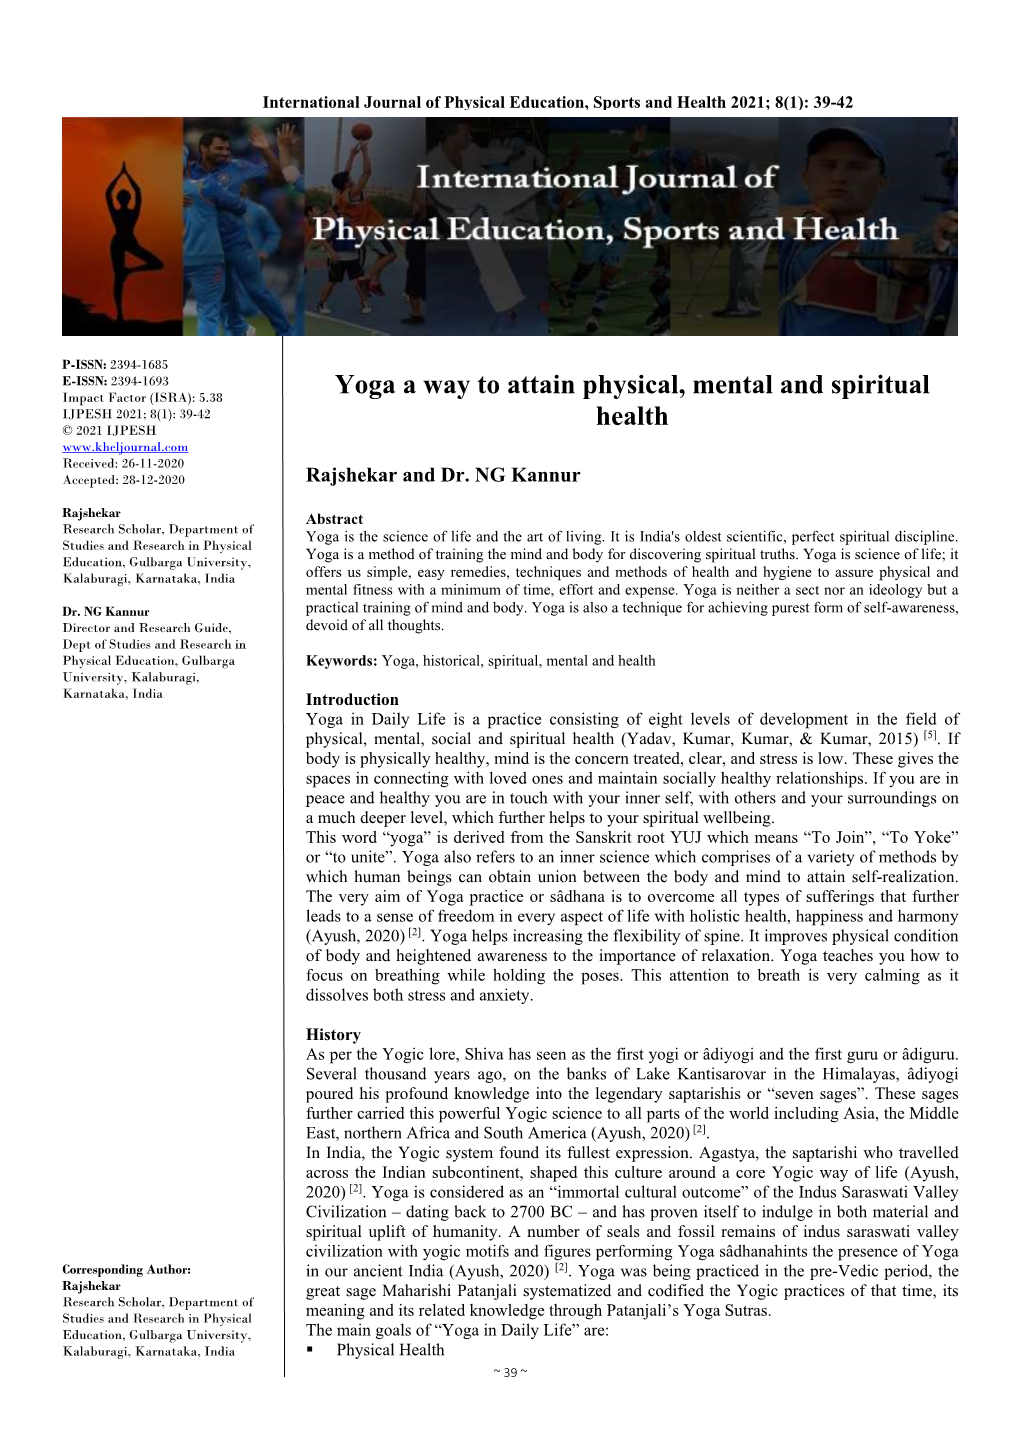 Yoga a Way to Attain Physical, Mental and Spiritual Health